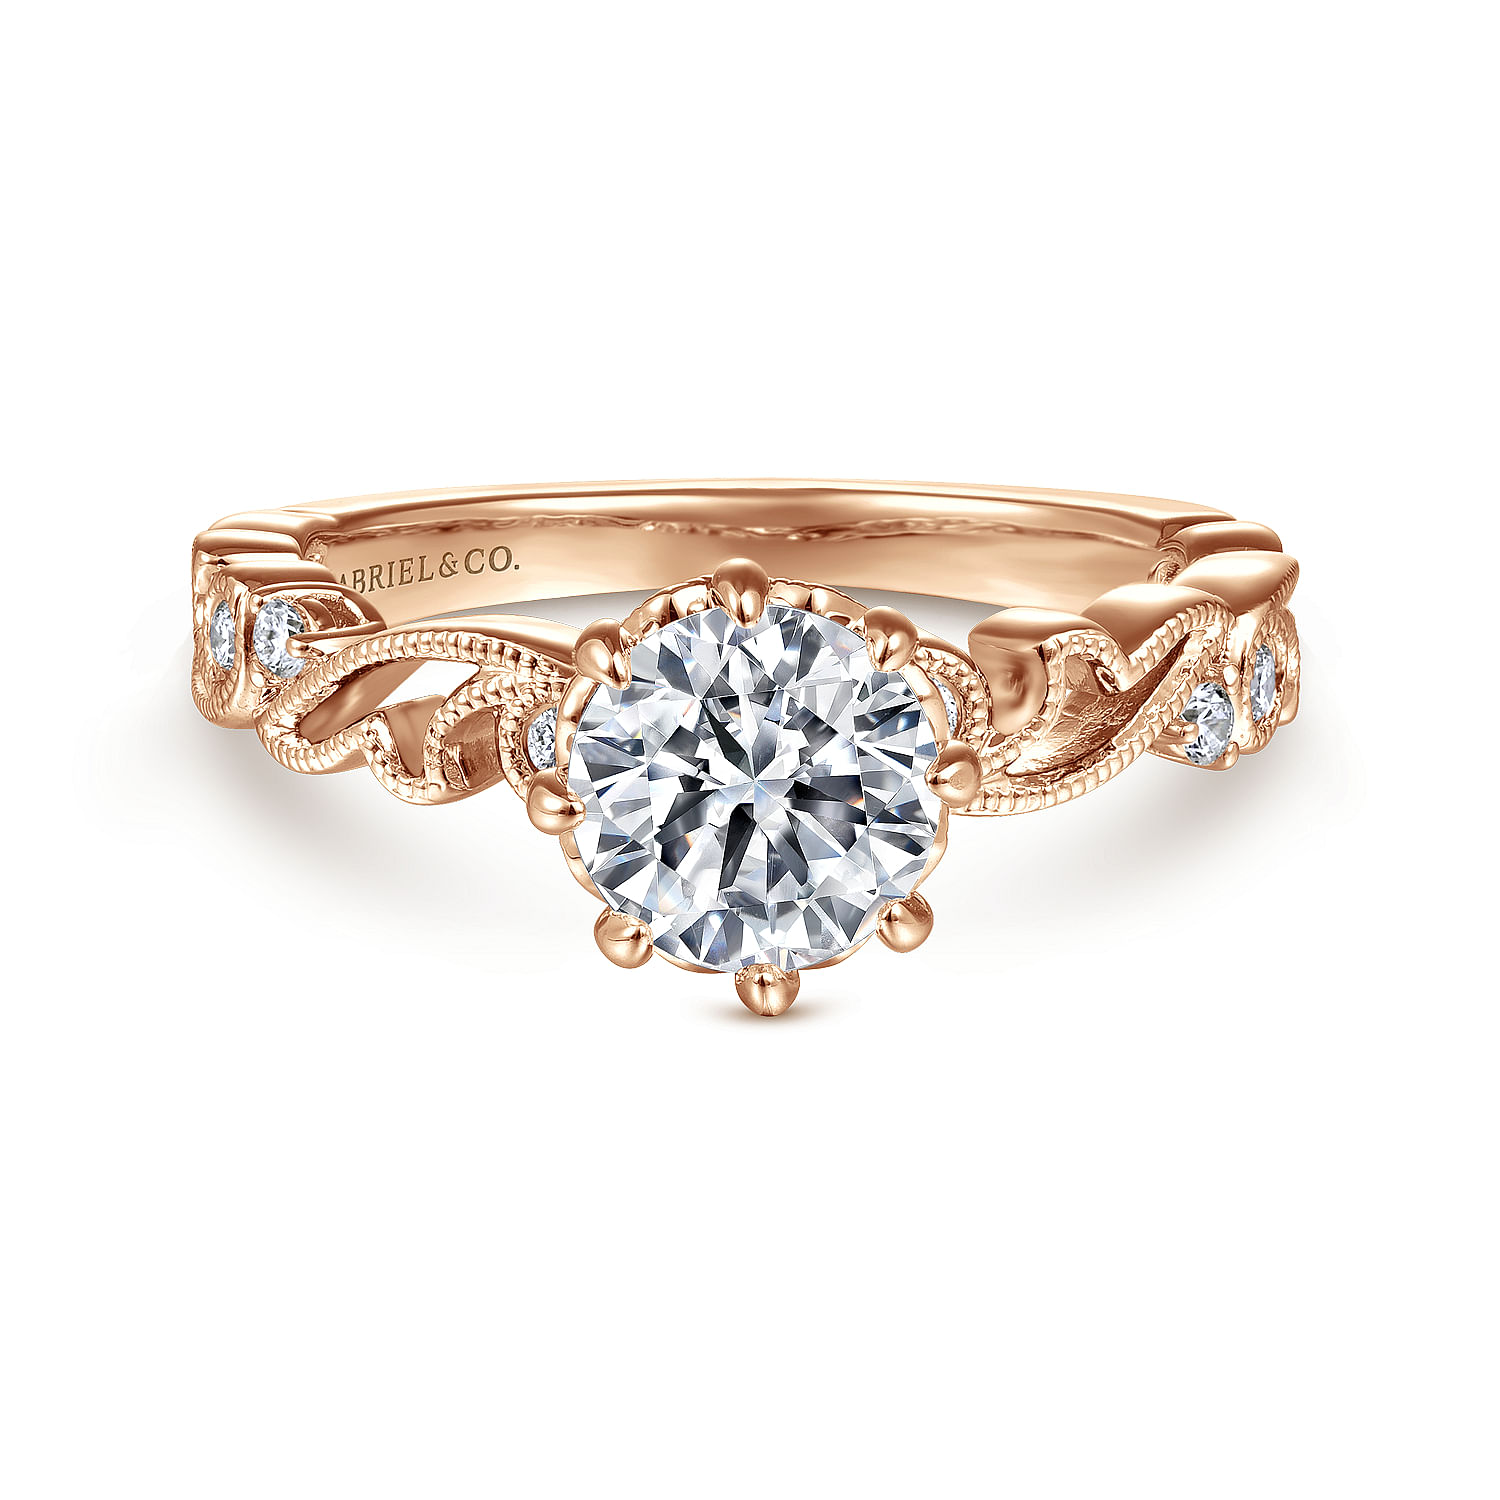 Arlington - Vintage Inspired 14K Rose Gold Round Diamond Engagement Ring